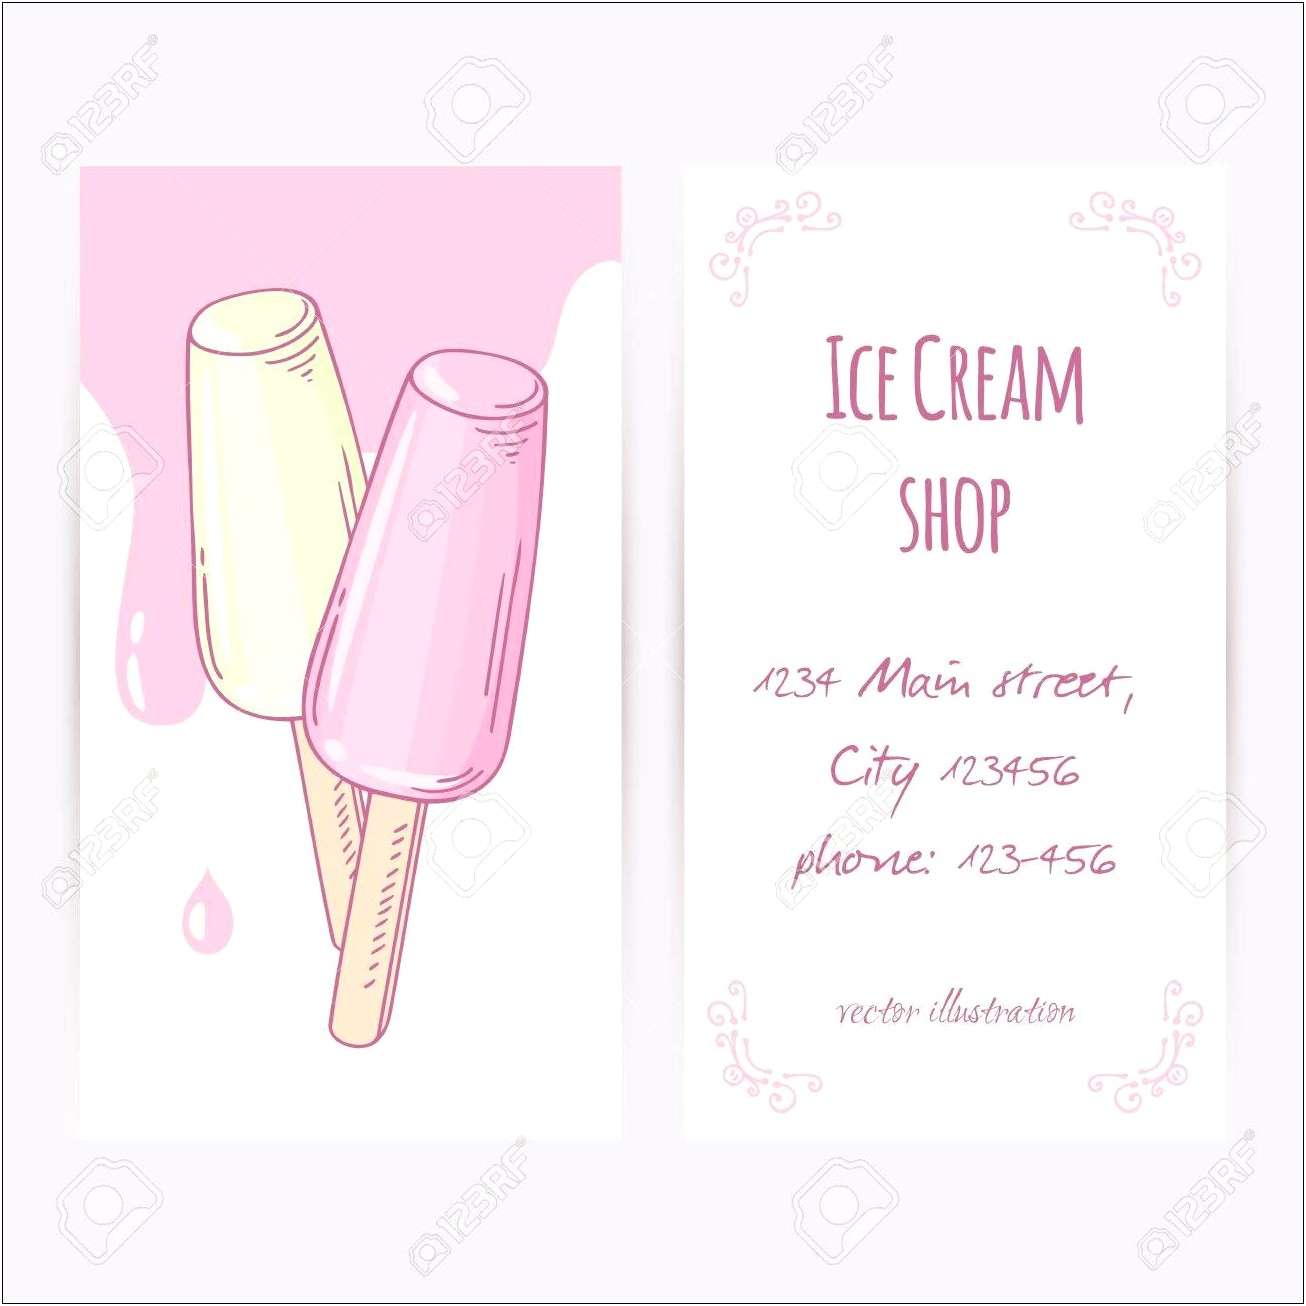 Free Ice Cream Business Card Templates